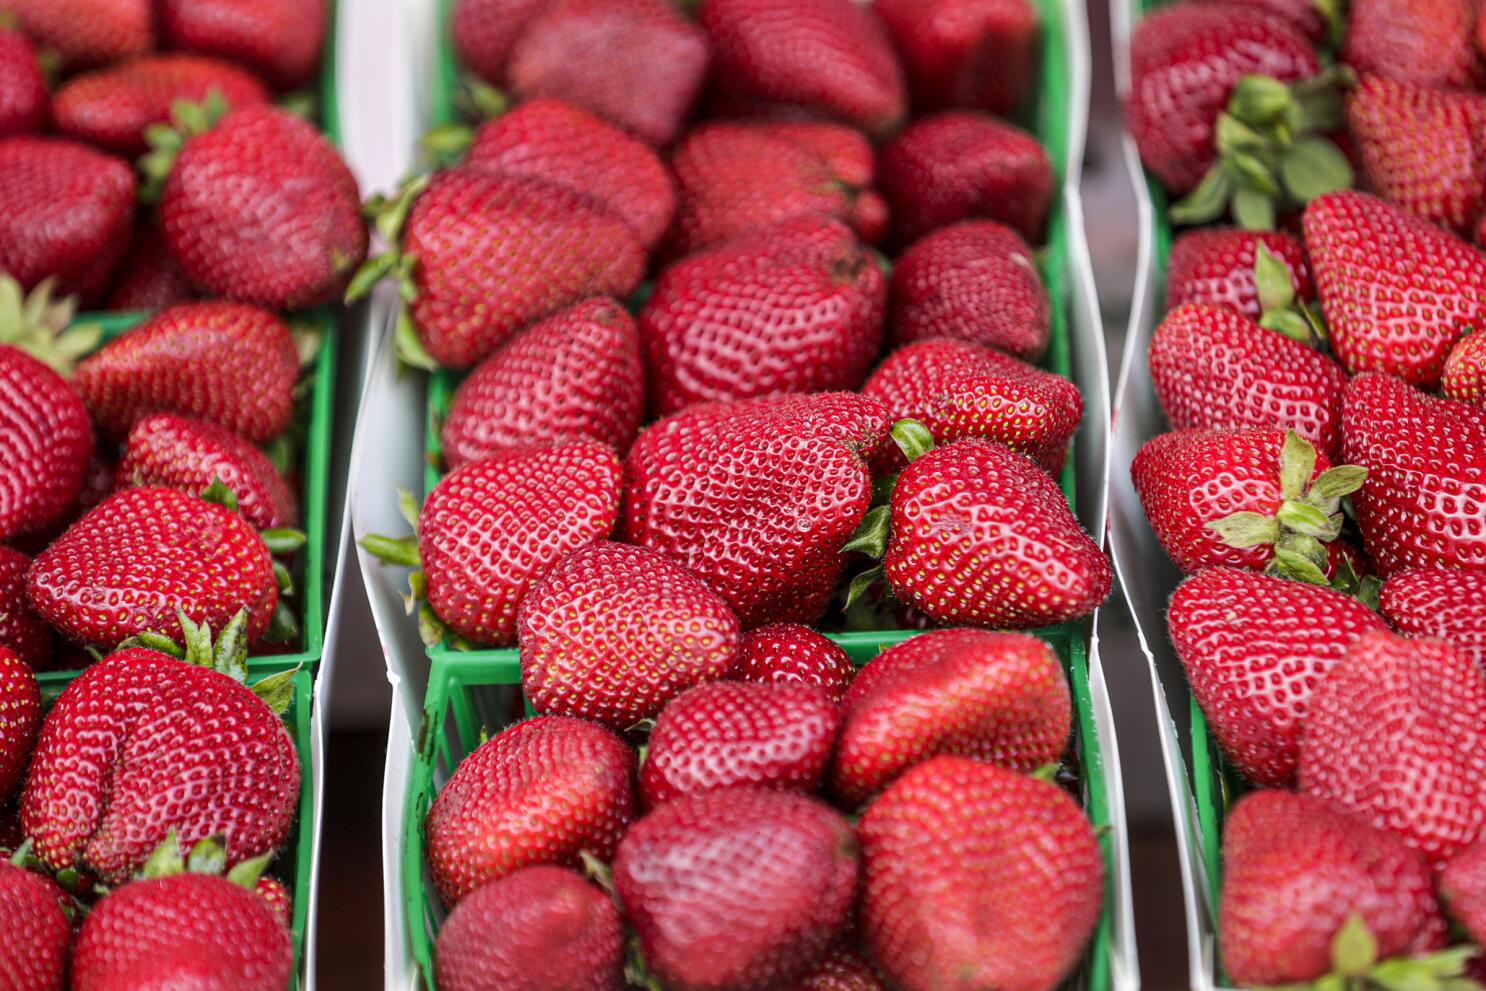 Hepatitis A outbreak in major brands' strawberries